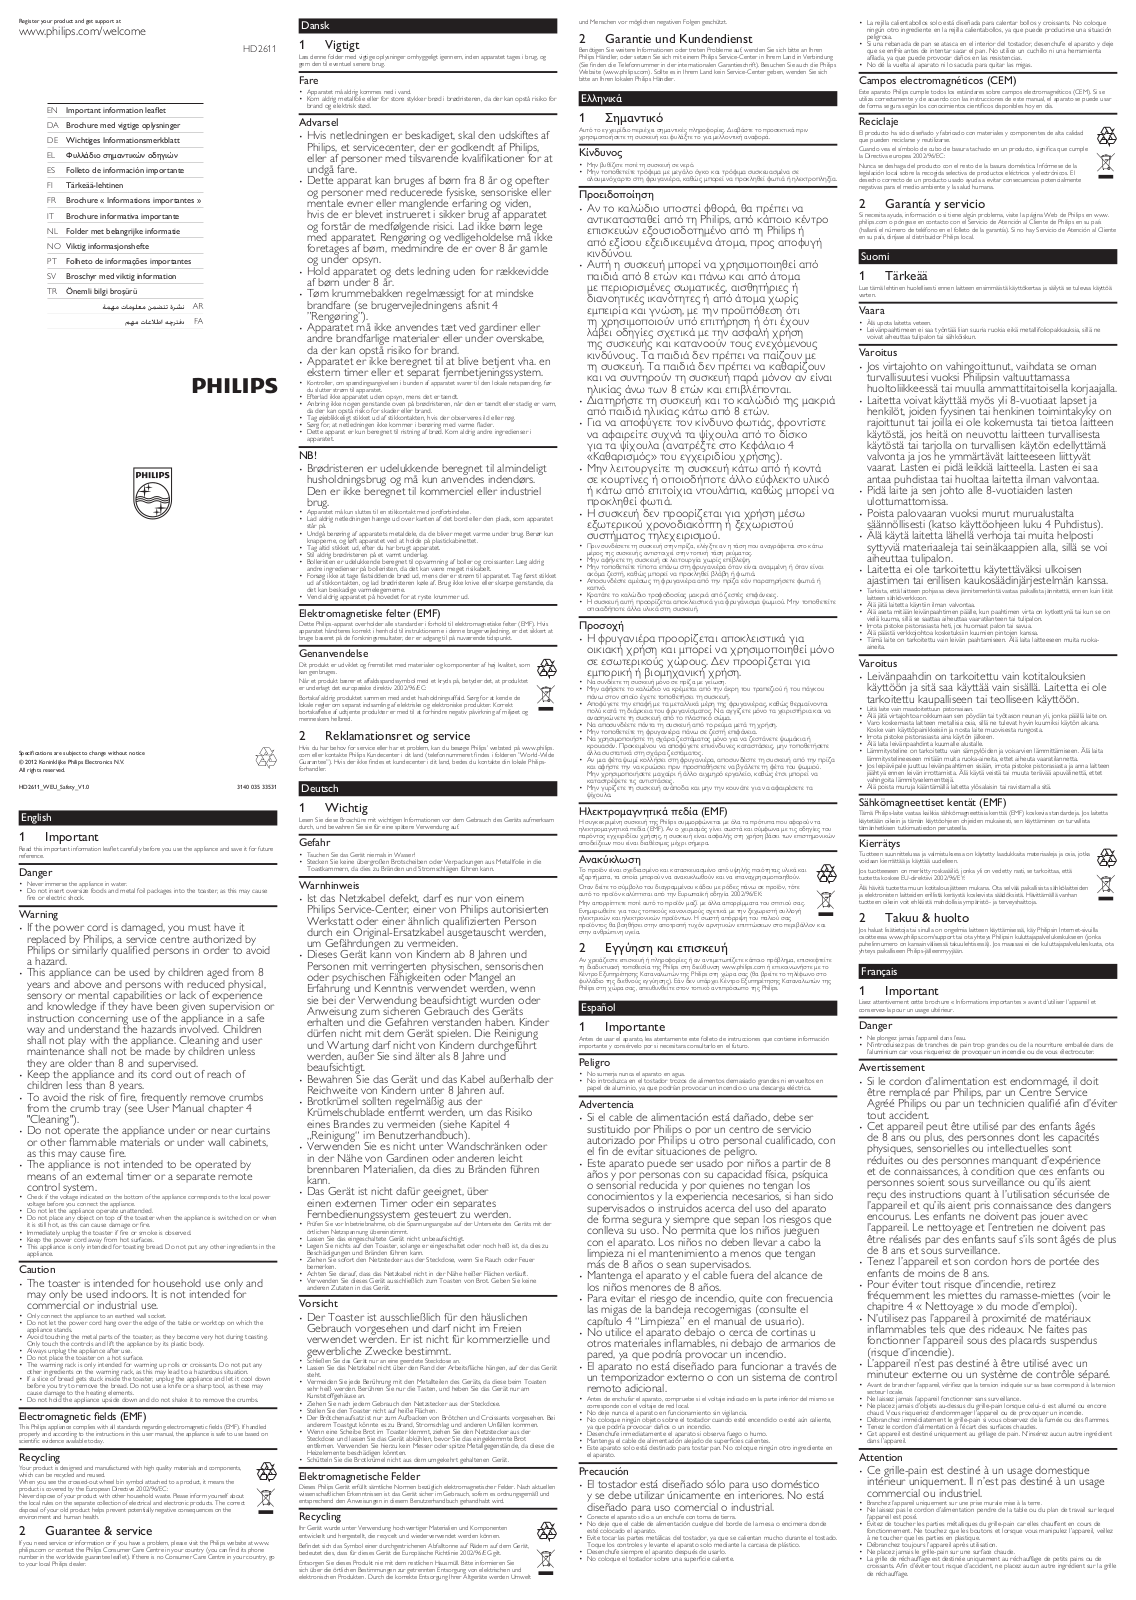 Philips Tostadora User Manual